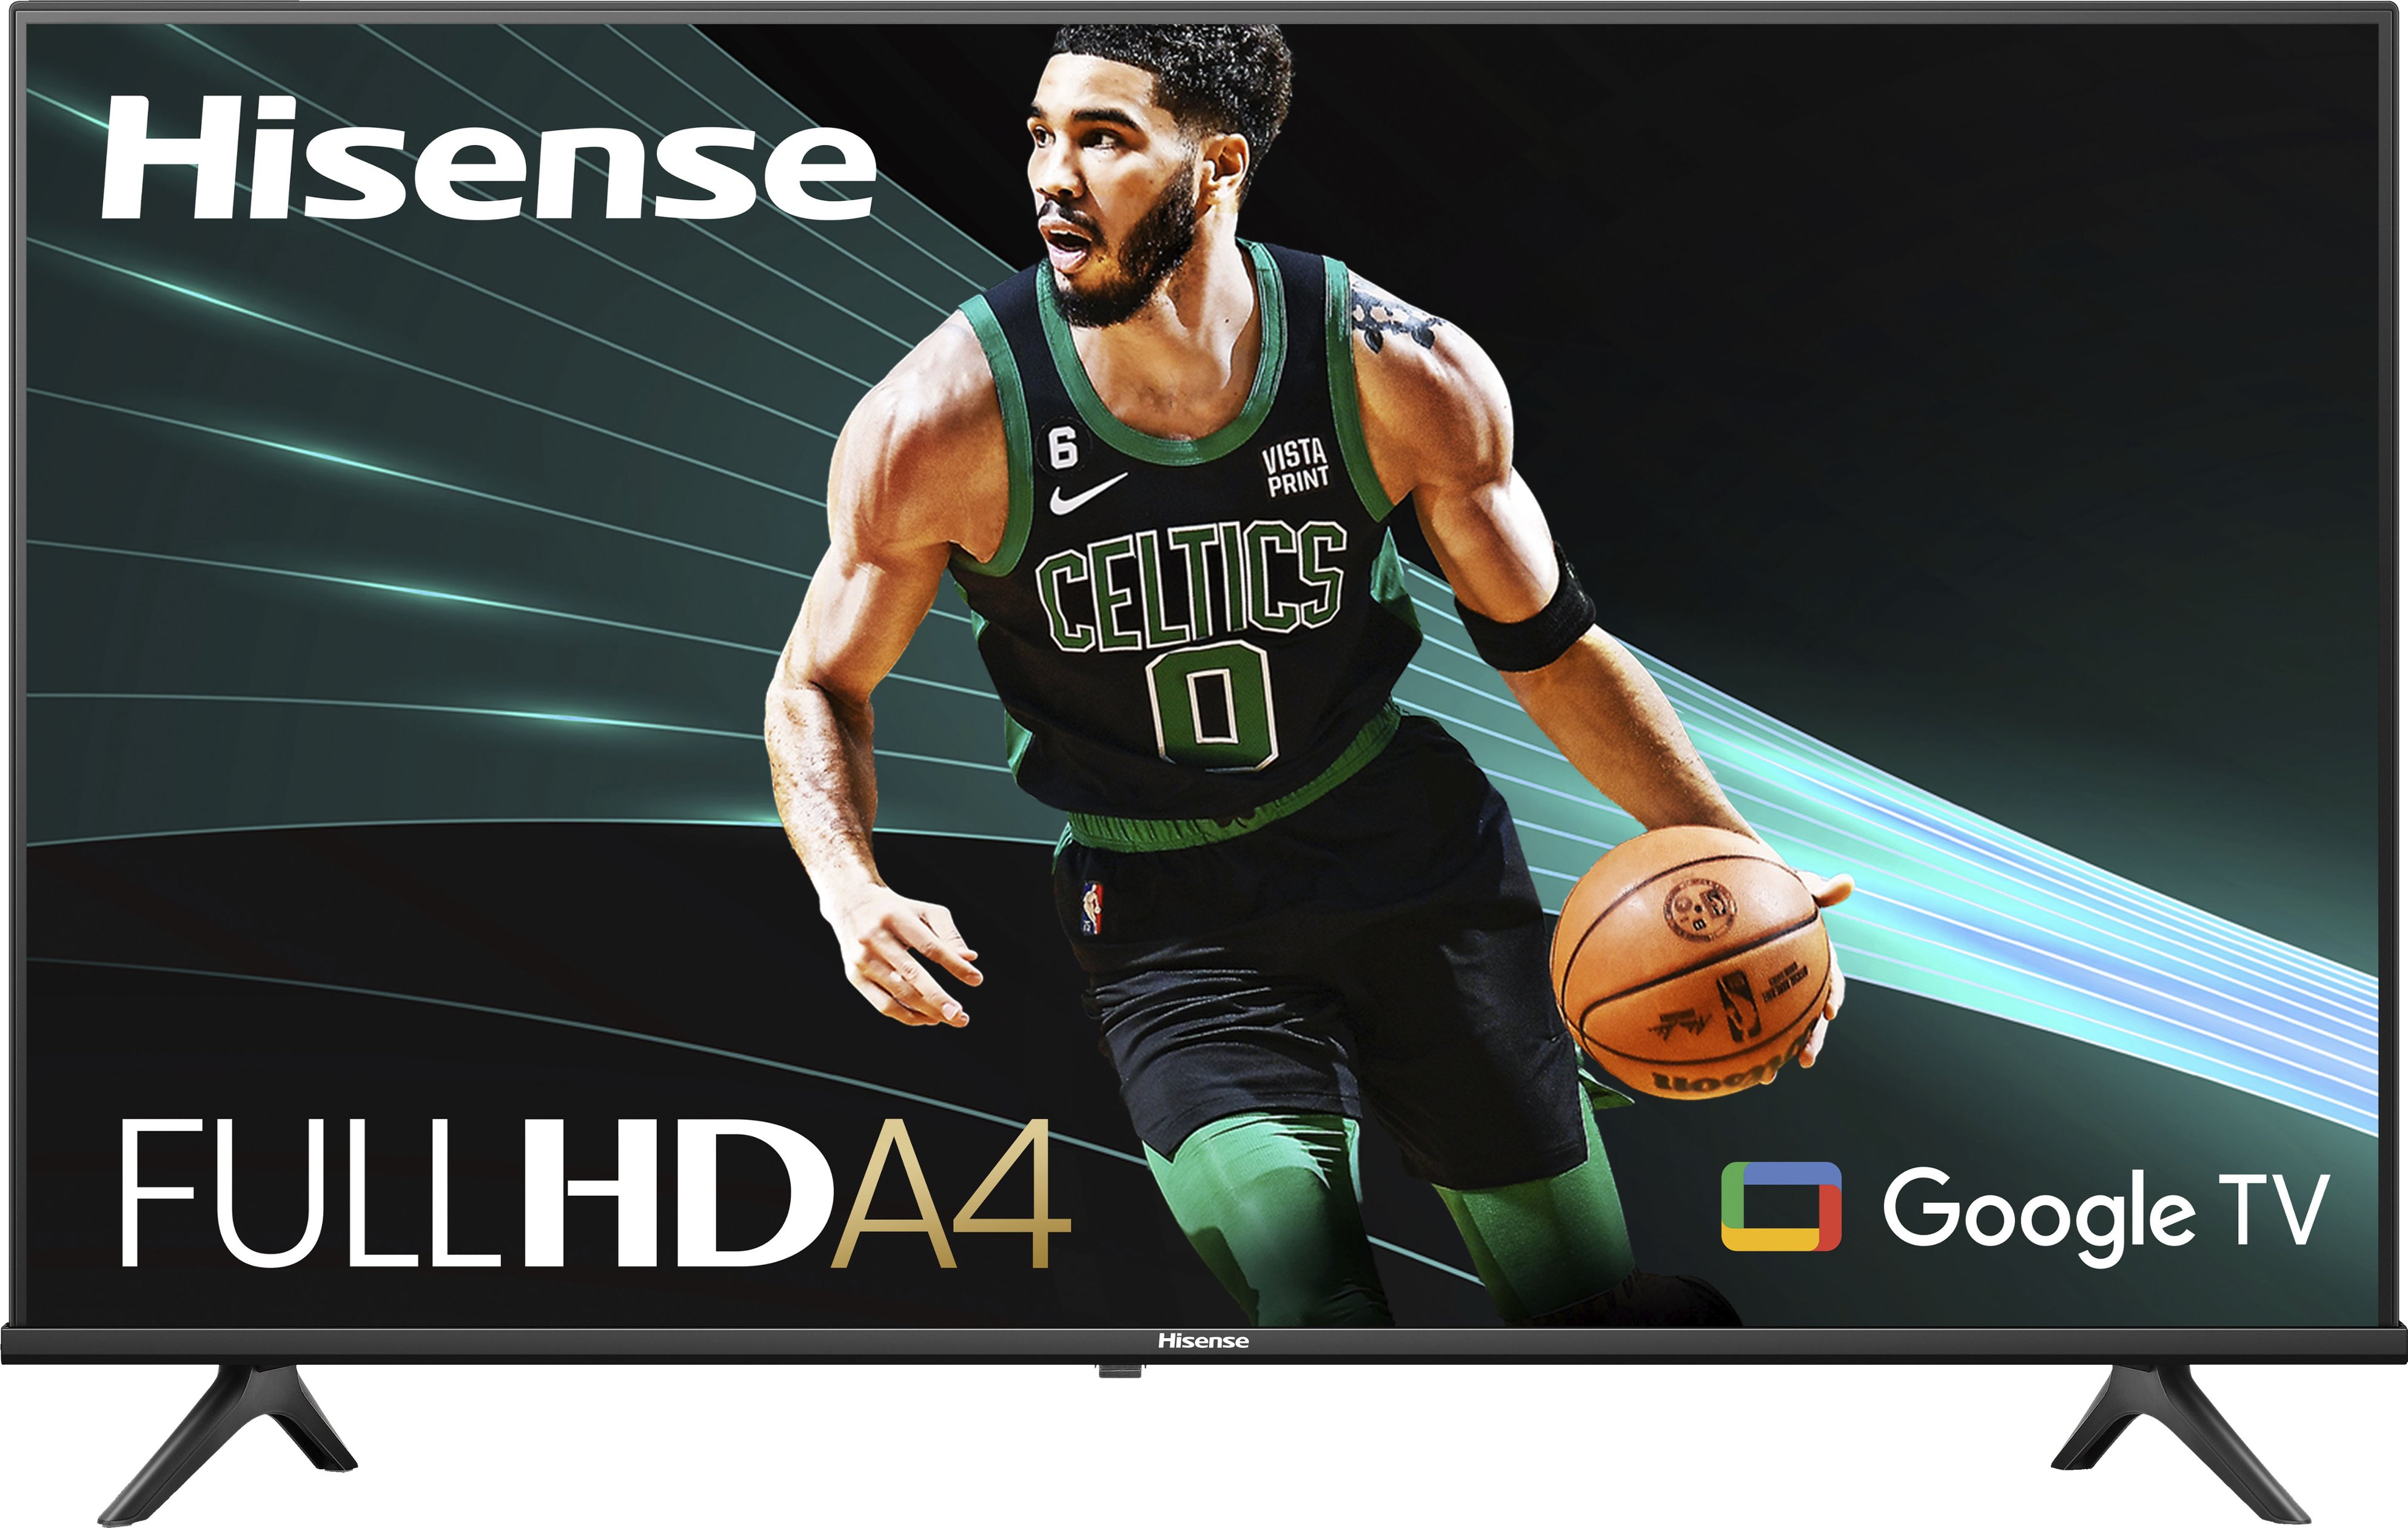 Smart TV Hisense A4 Series 43A4H Led android Full HD 43 120V